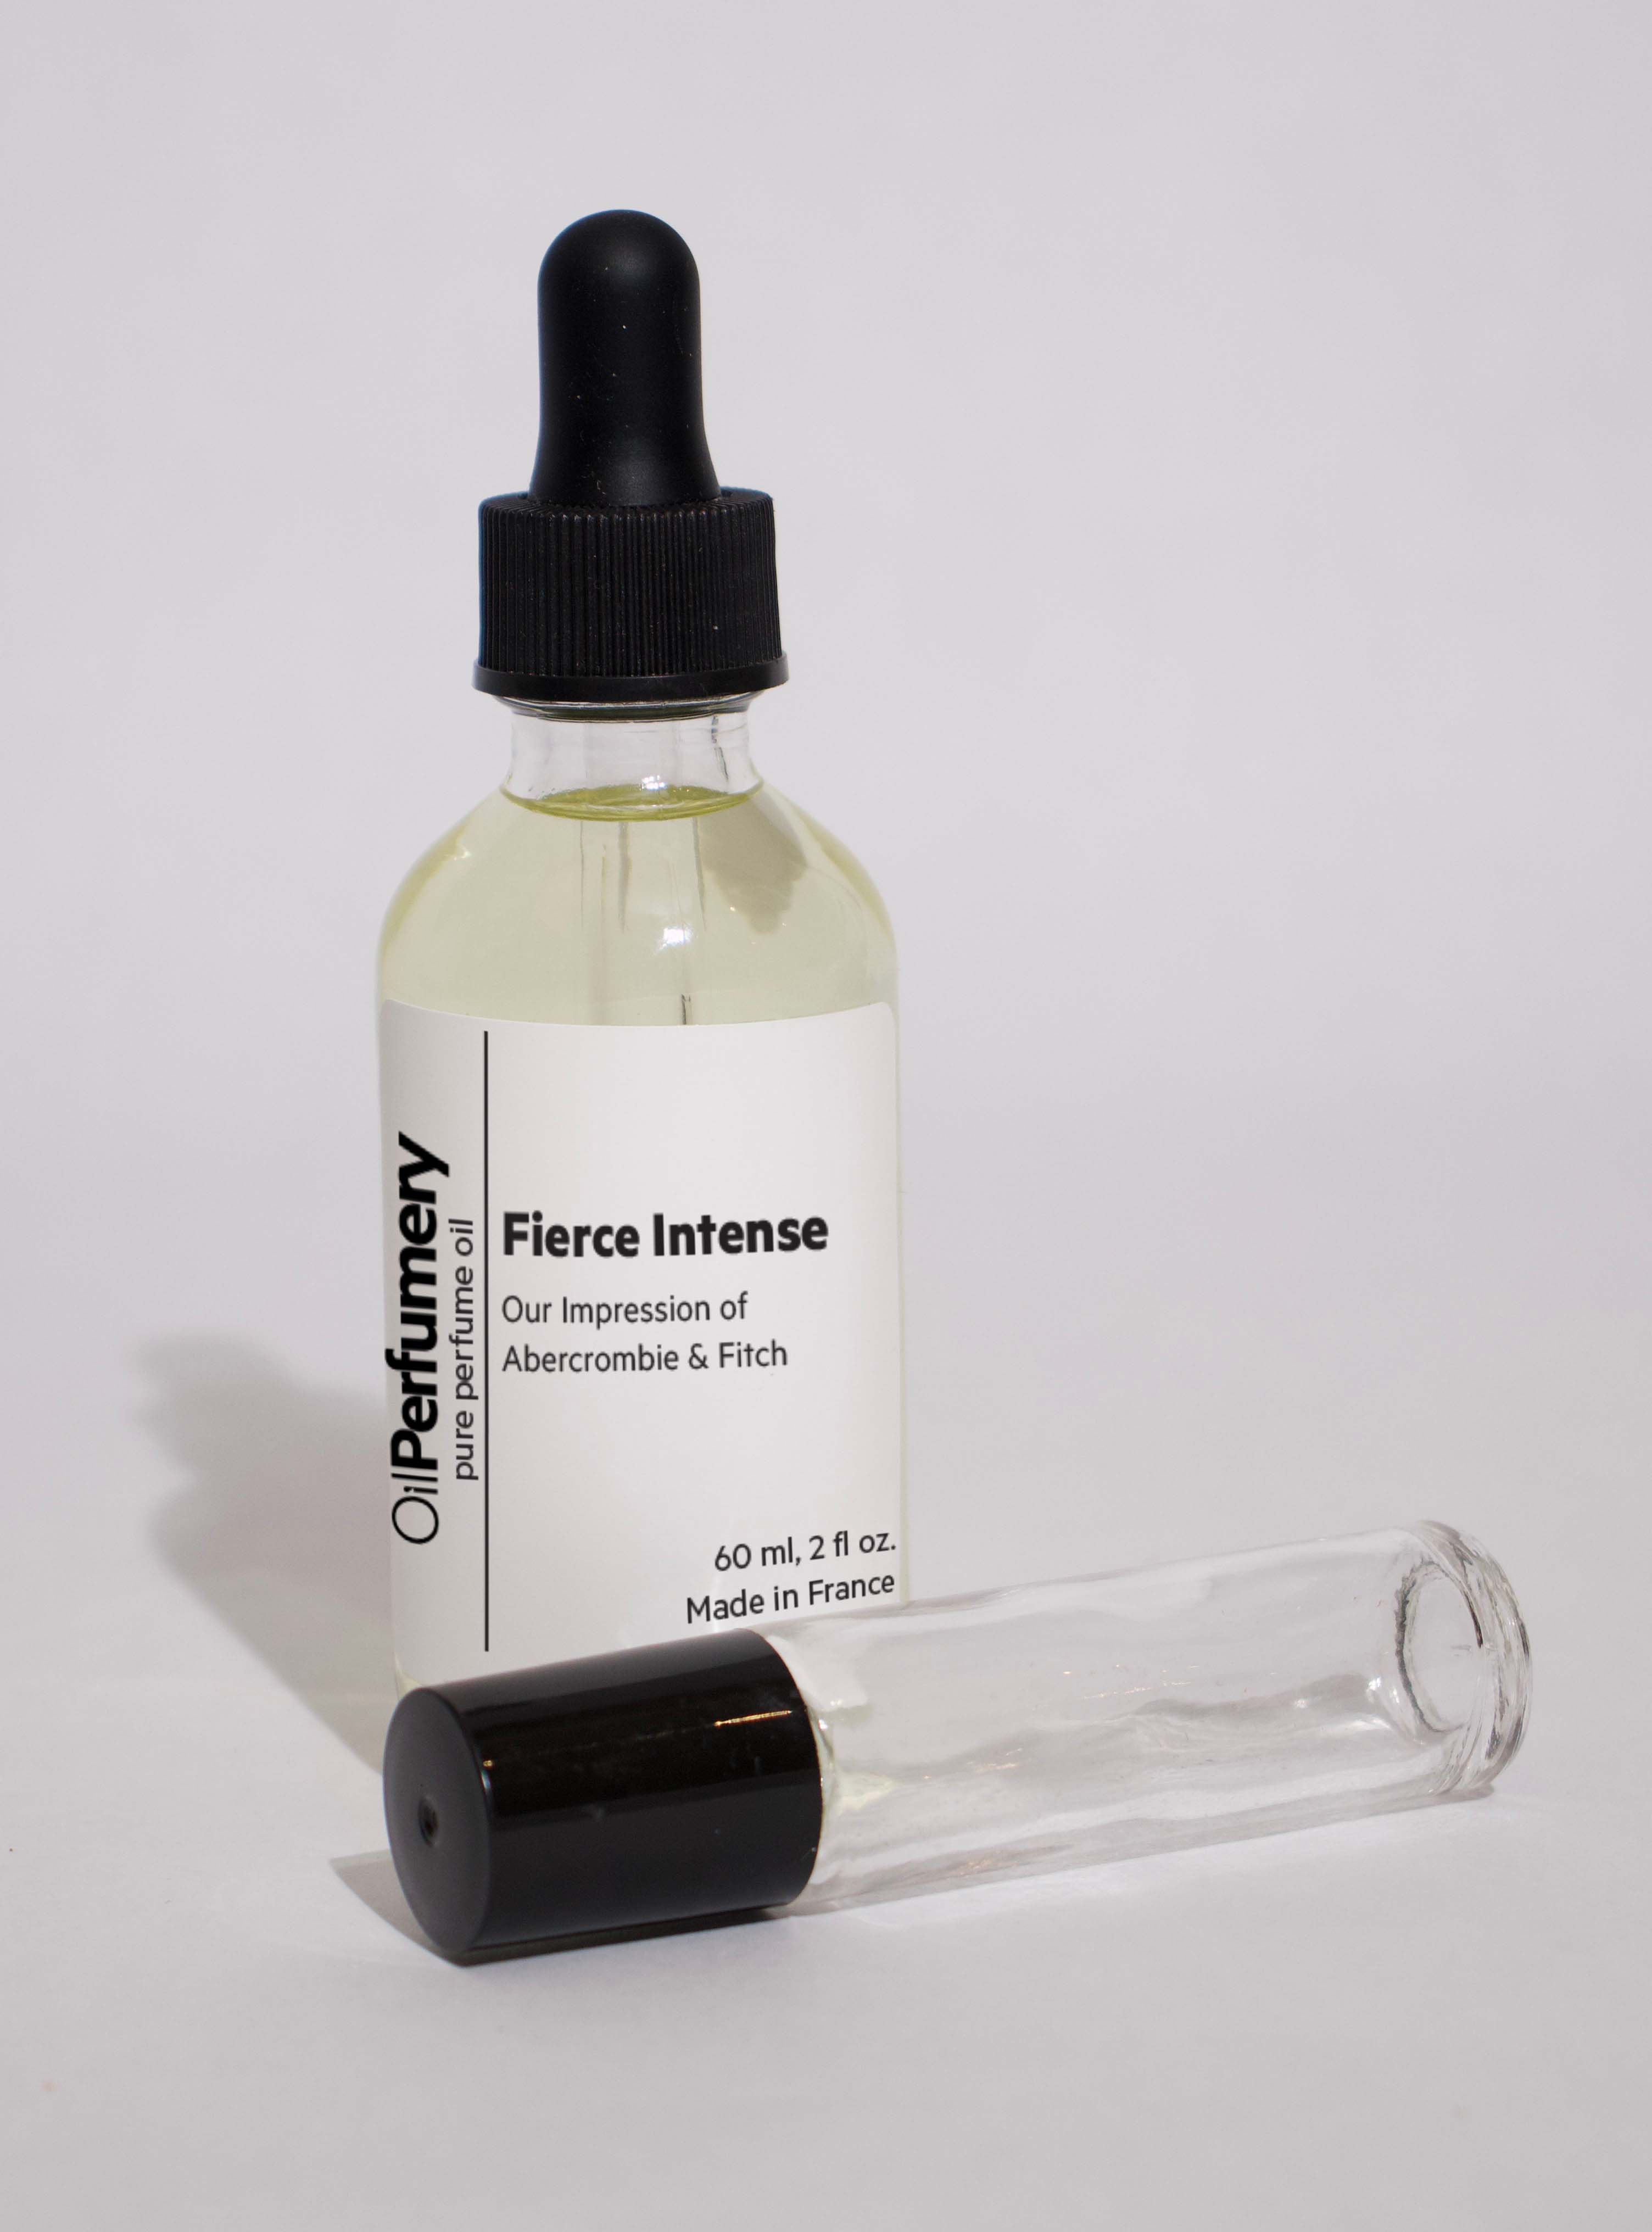 Oil Perfumery impression of Abercrombie & Fitch - Fierce Intense